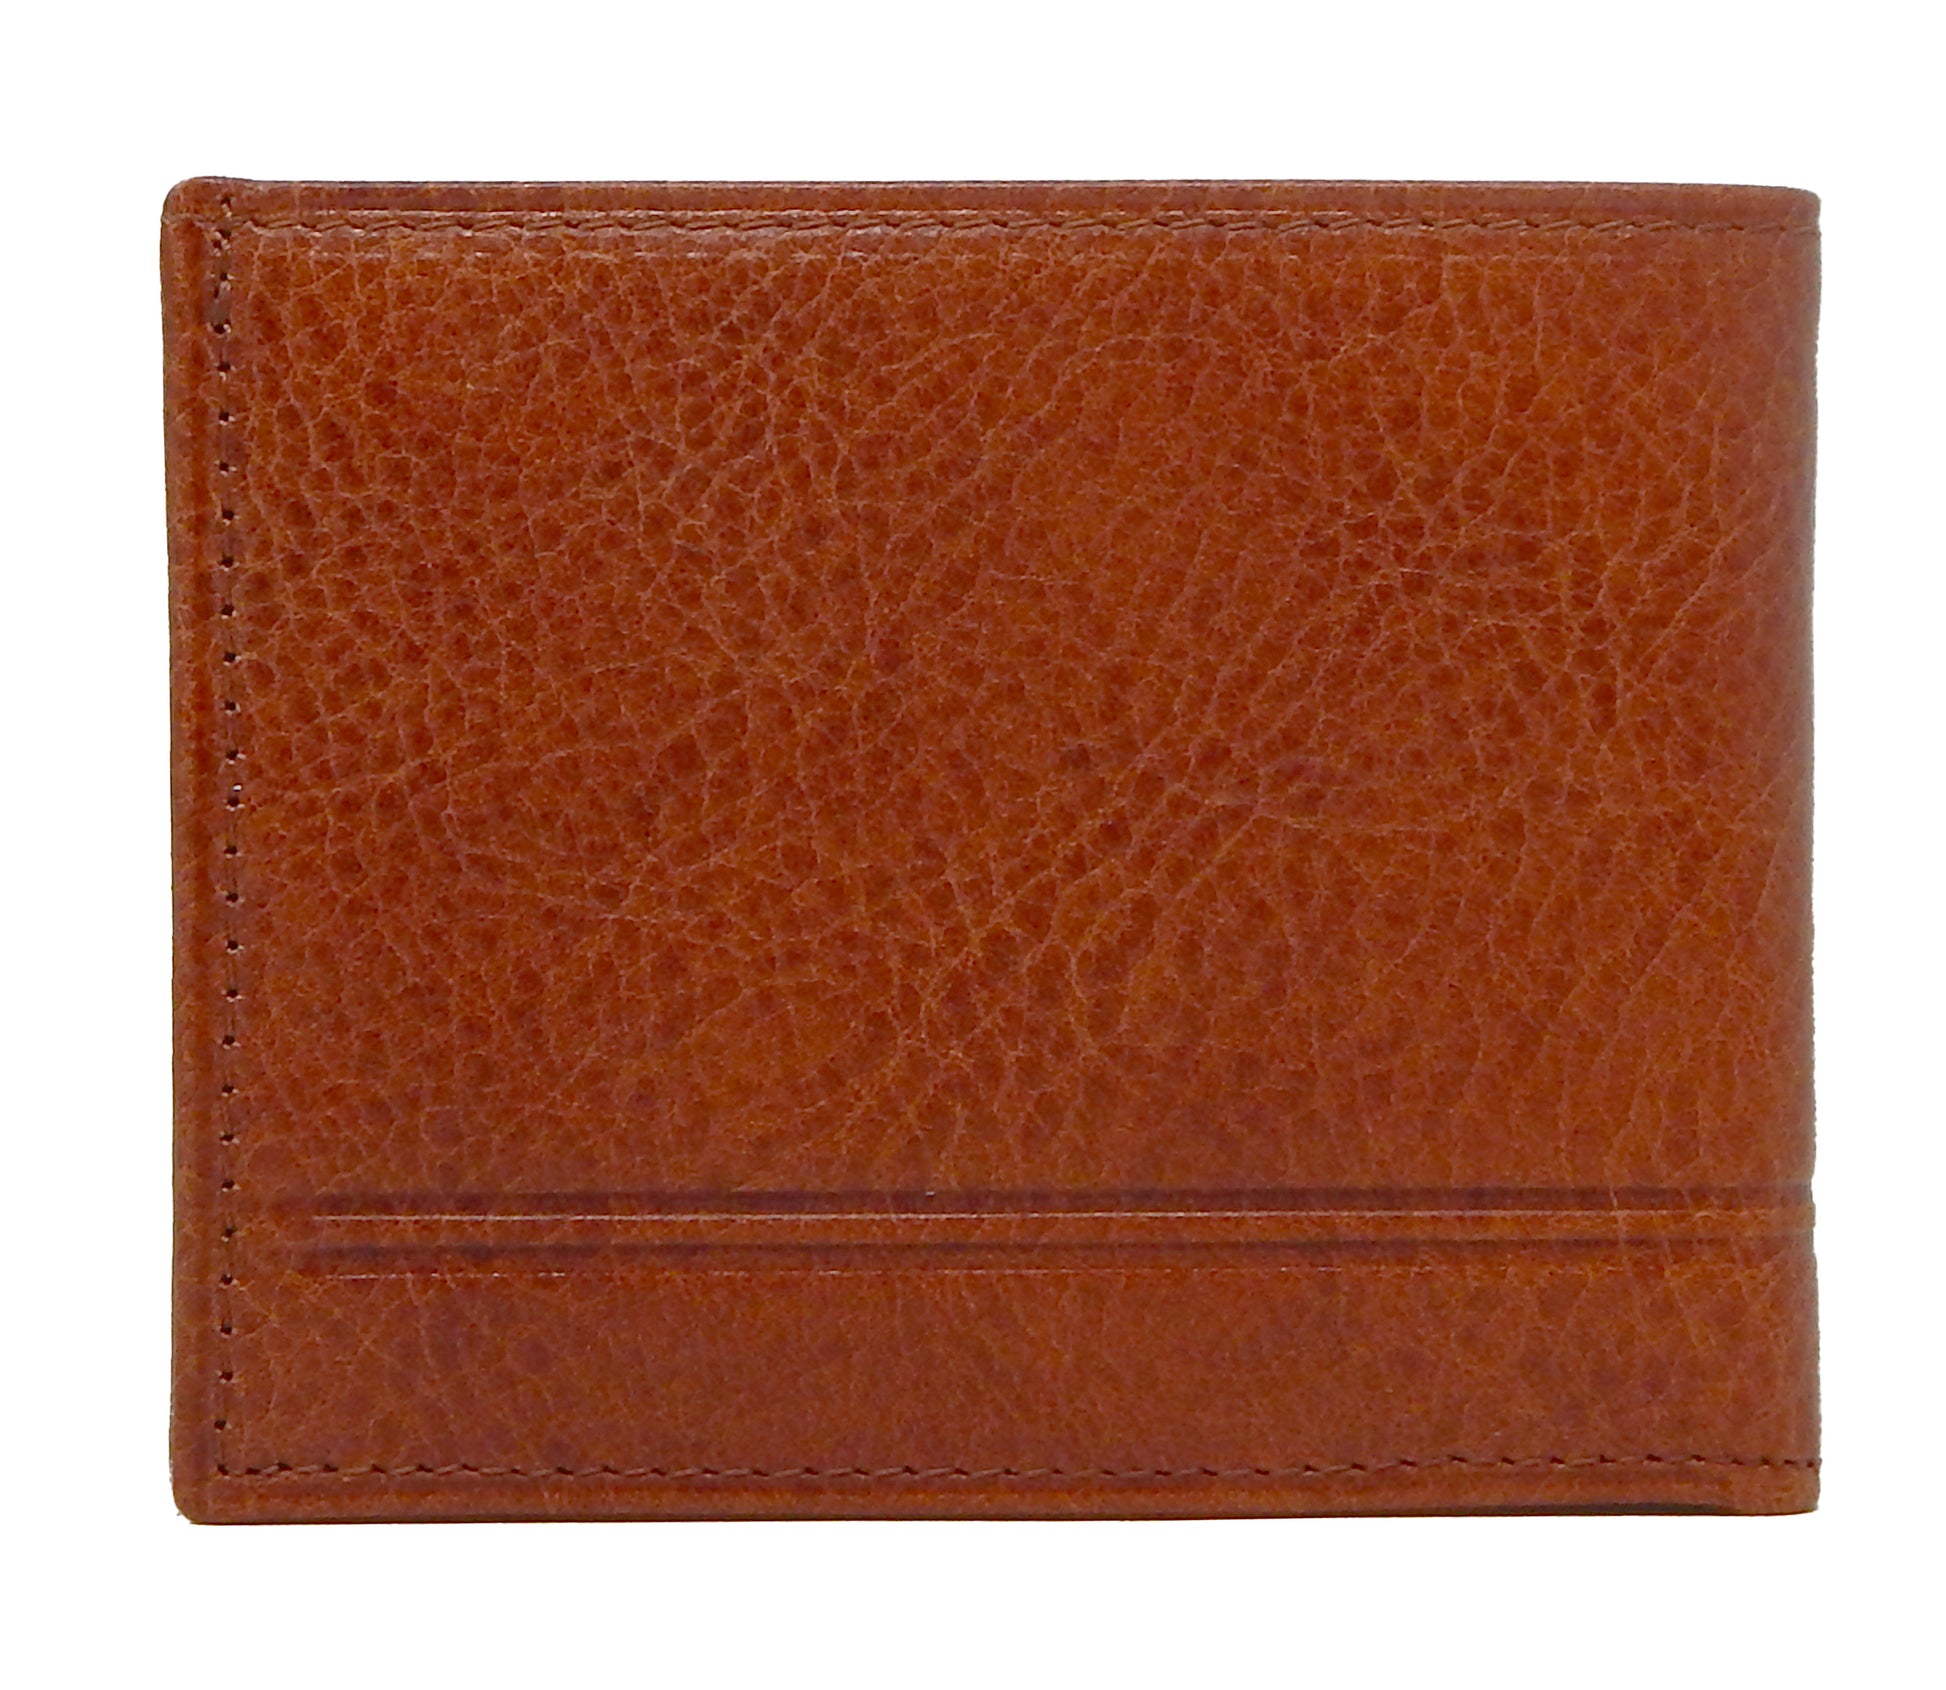 Cavalinho Men's Leather Trifold Leather Wallet - SaddleBrown - 28160529.13.99_3